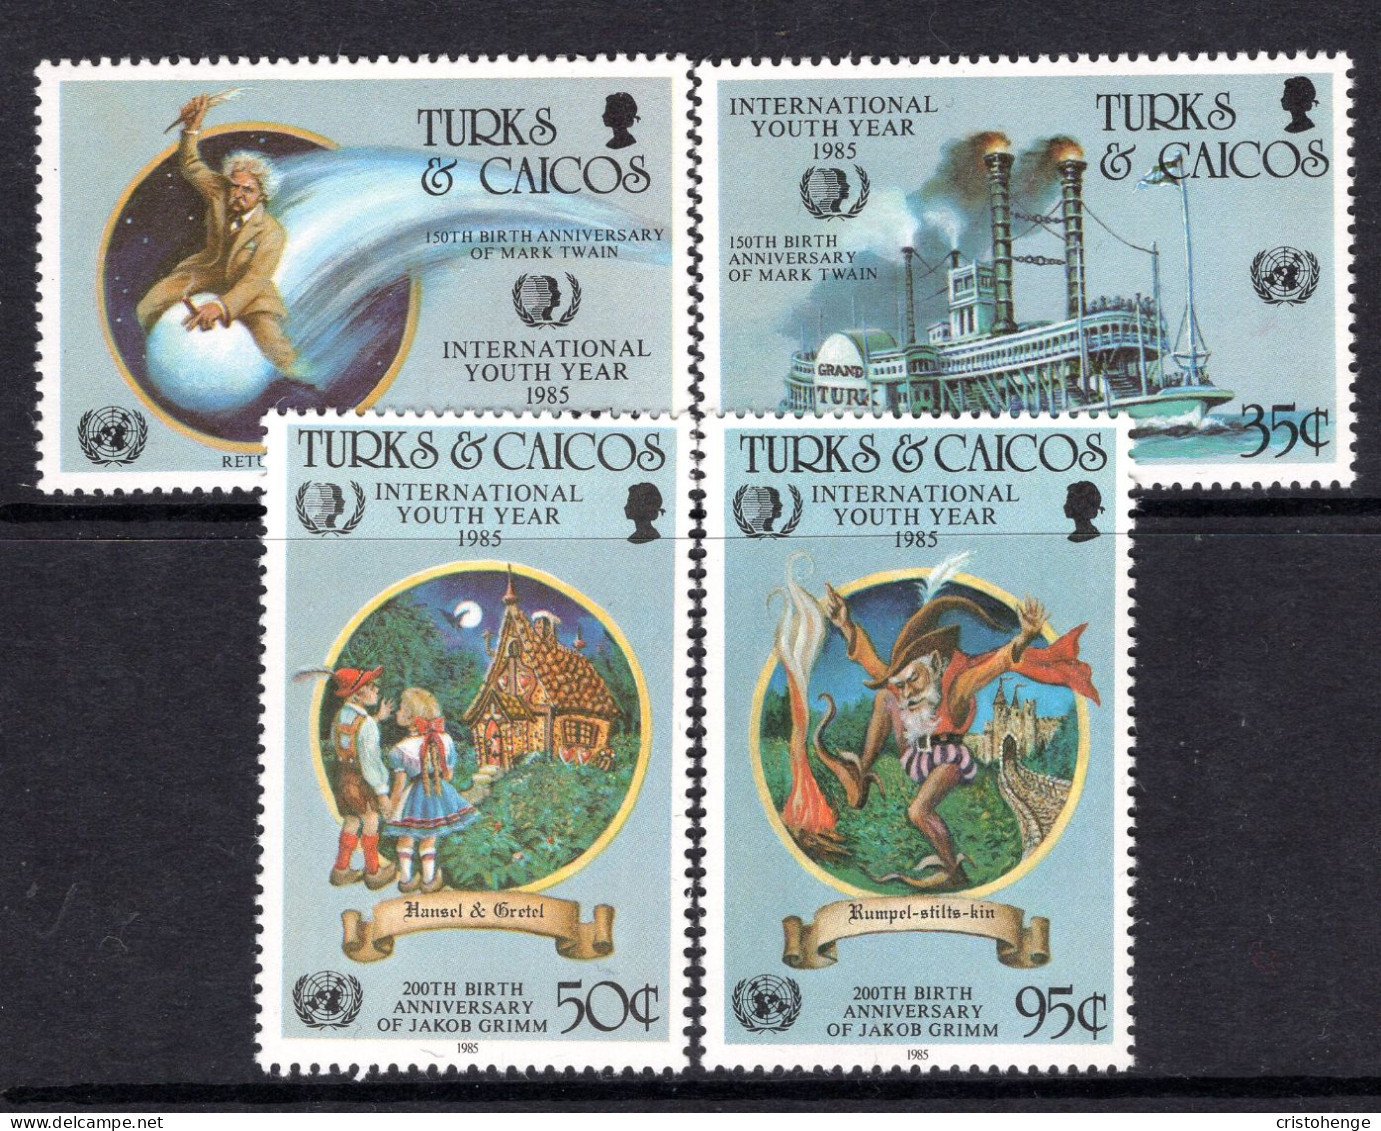 Turks & Caicos Islands 1985 Birth Anniversaries Of Mark Twain & Jakob Grimm Set MNH (SG 849-852) - Turks And Caicos